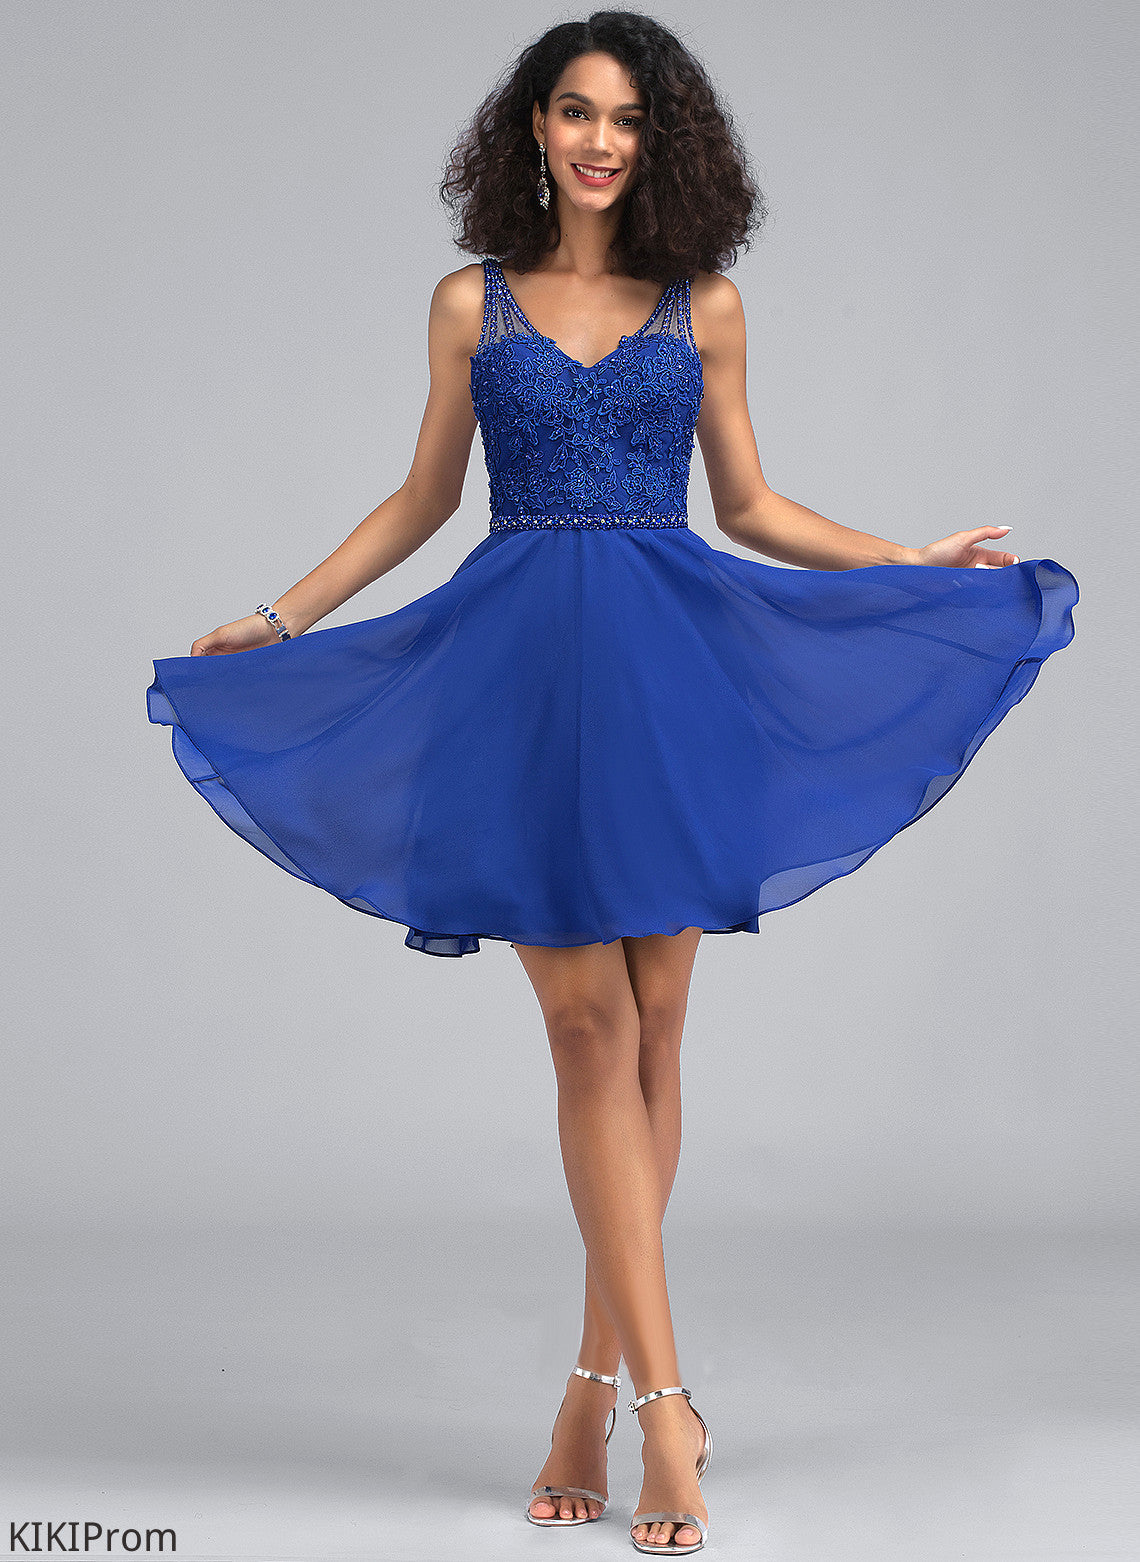 Short/Mini Dress Homecoming Dresses Homecoming With Beading Jewel Chiffon V-neck A-Line Lace